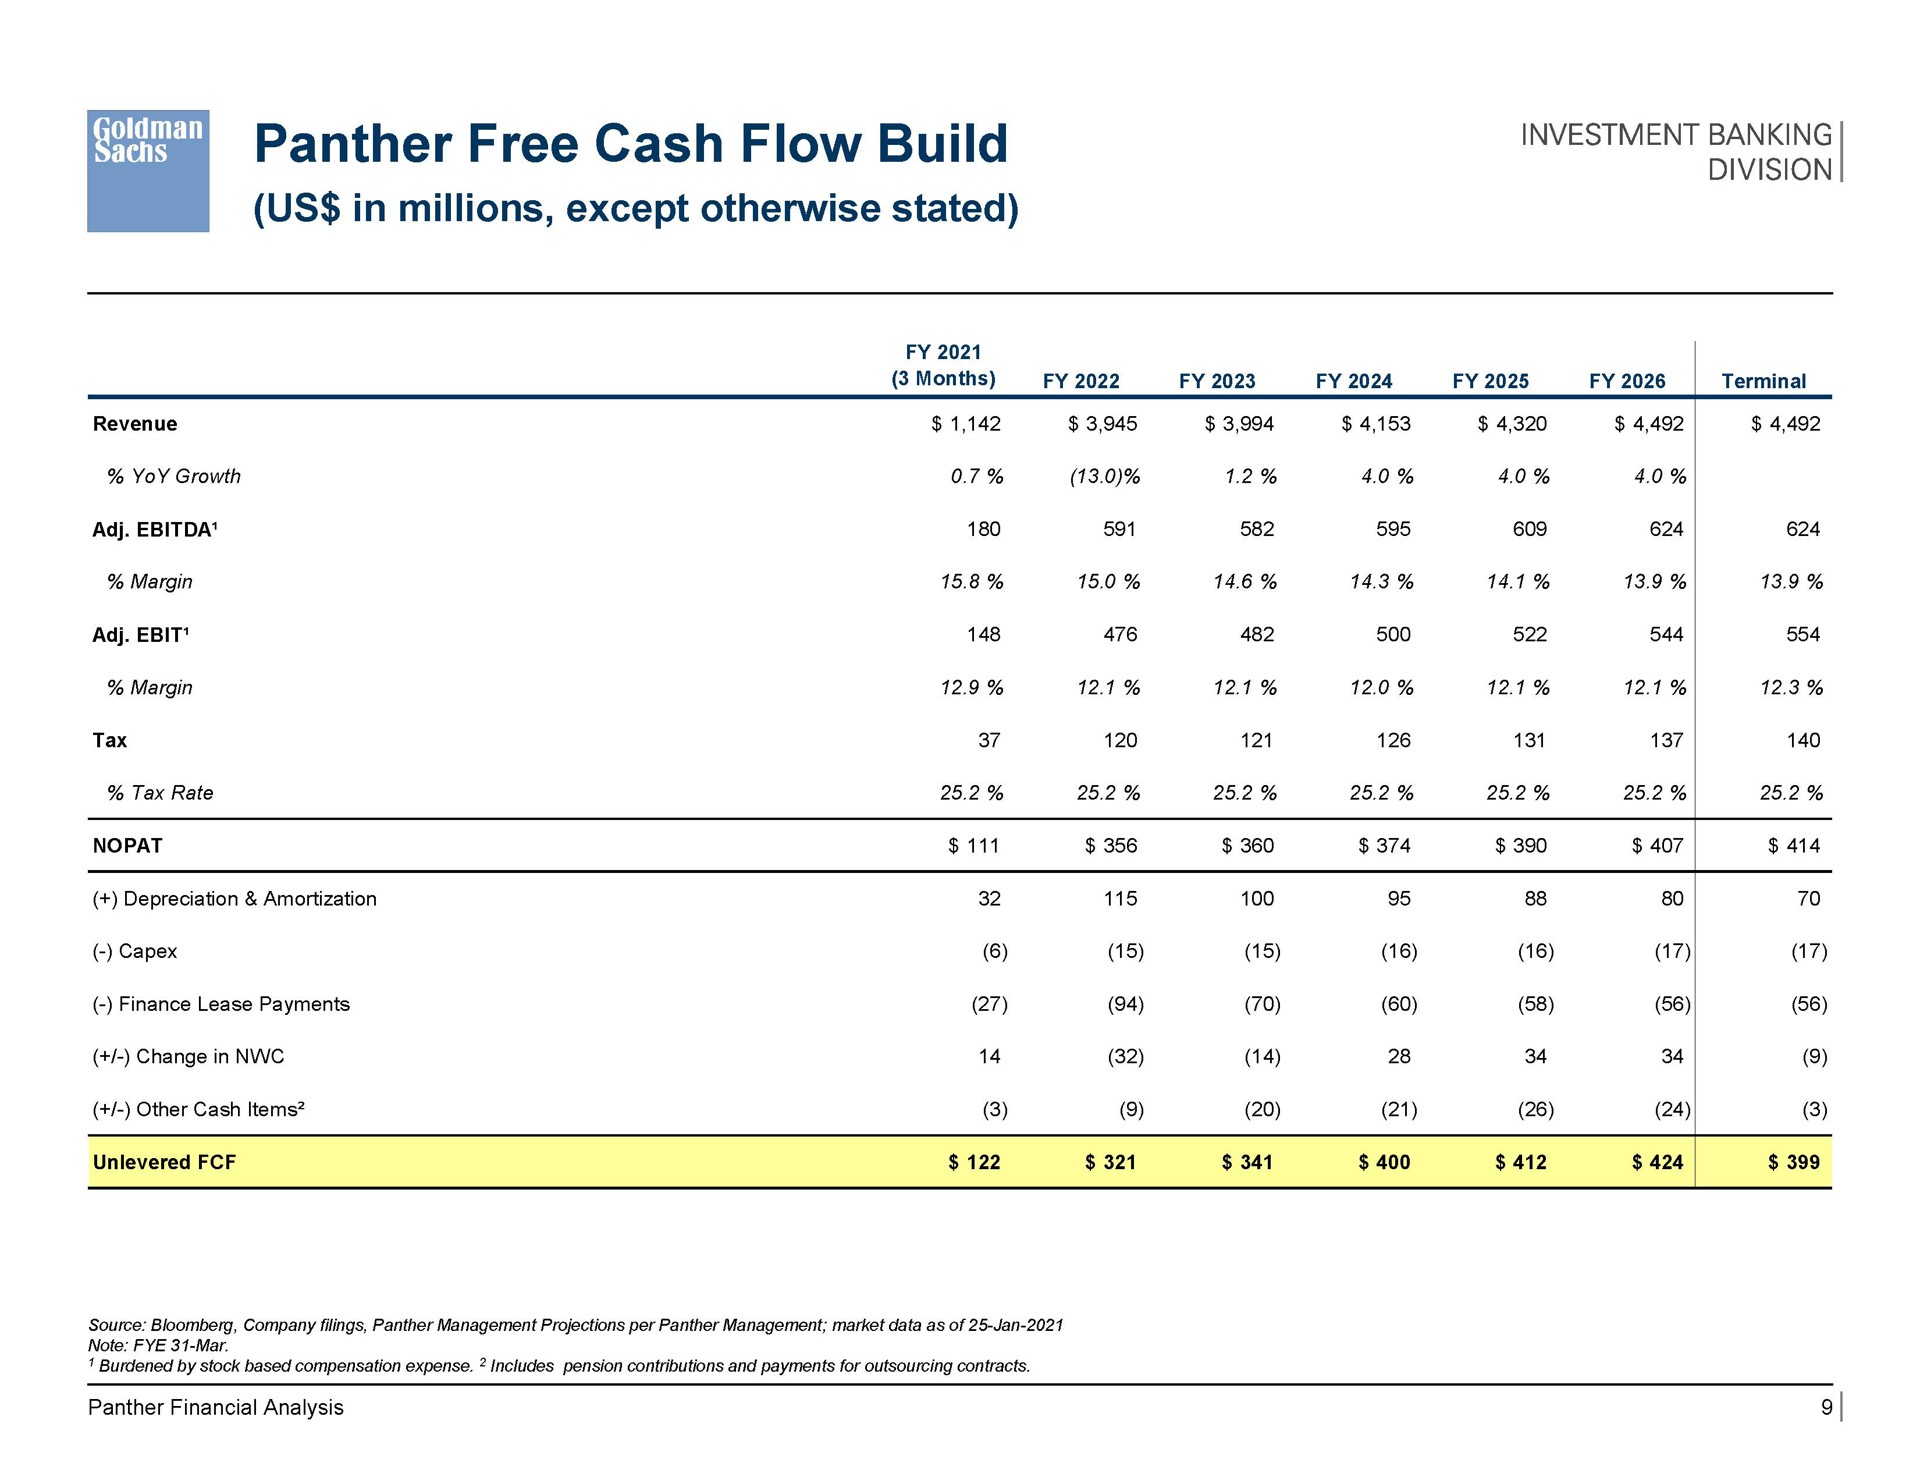 panther free cash flow build investment banking | Goldman Sachs